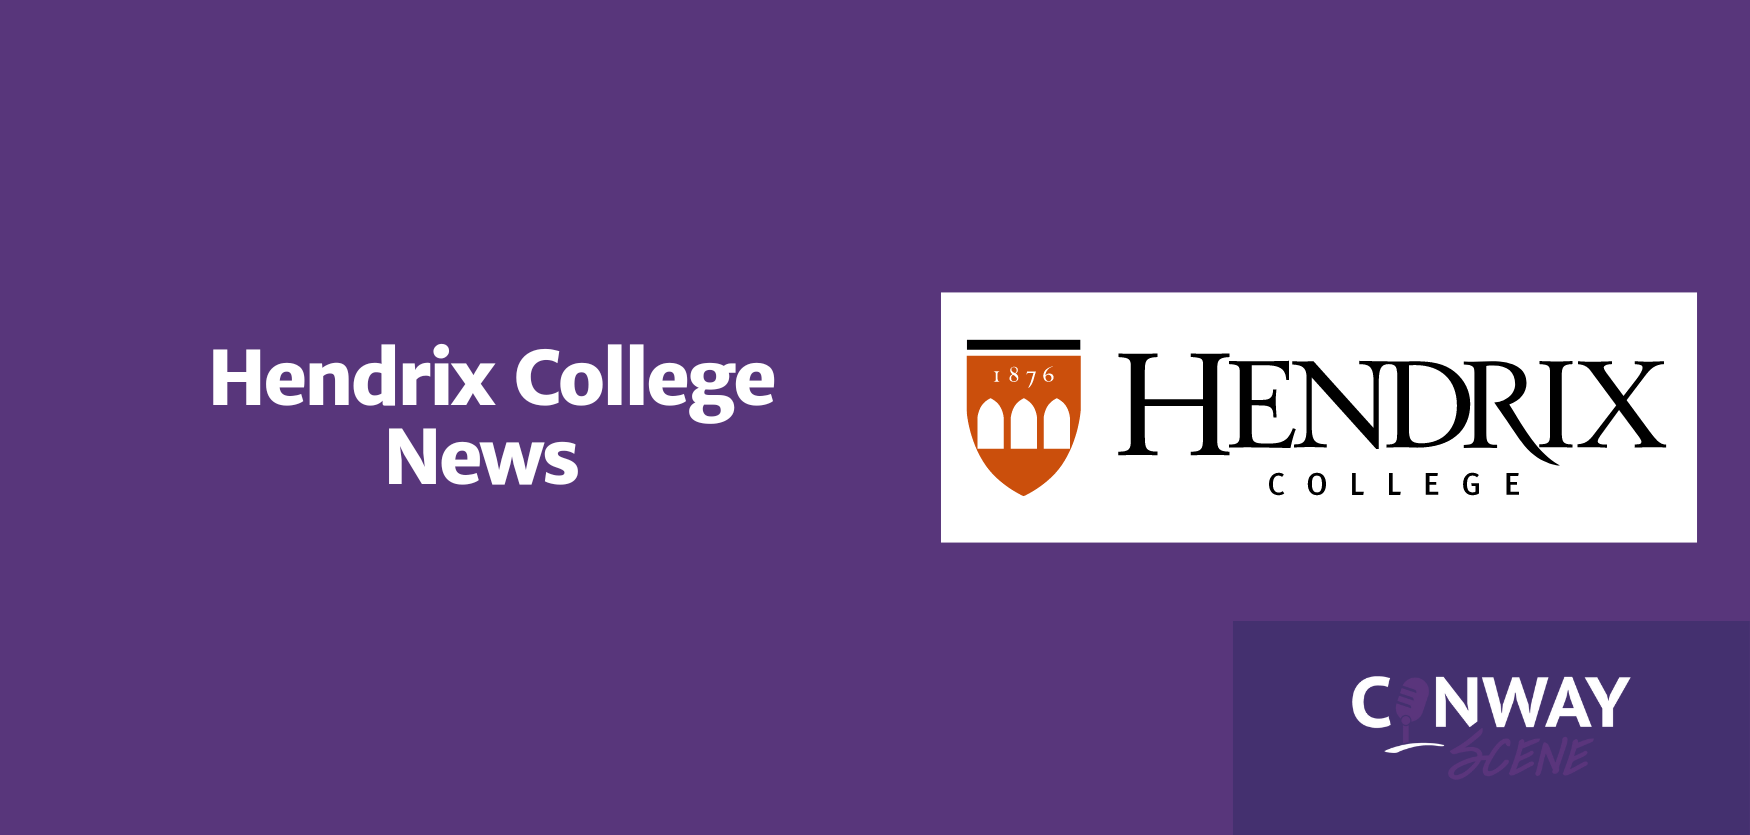 Hendrix College News